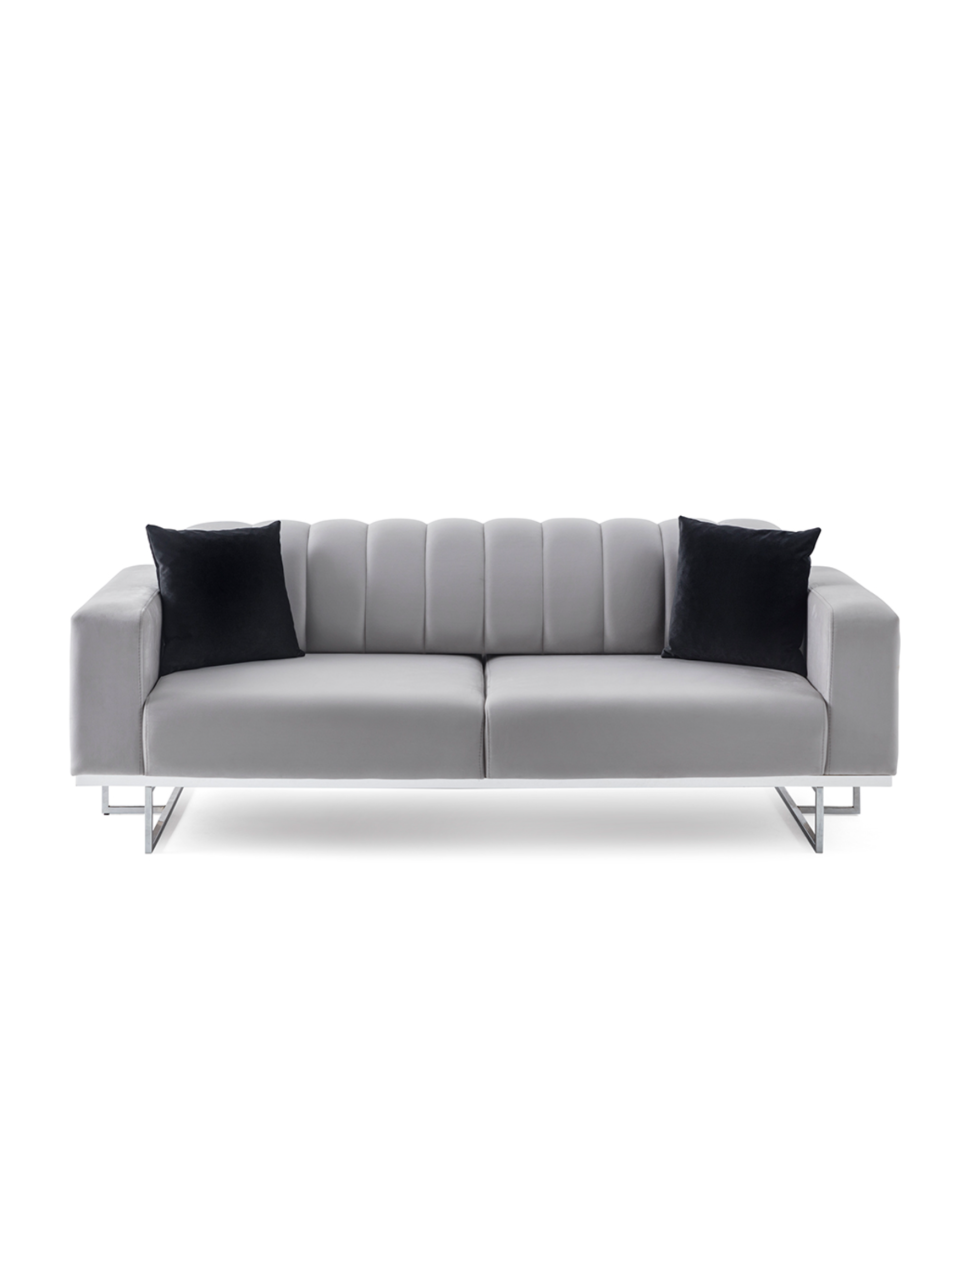 Milos Sofa Set - Home Store Furniture